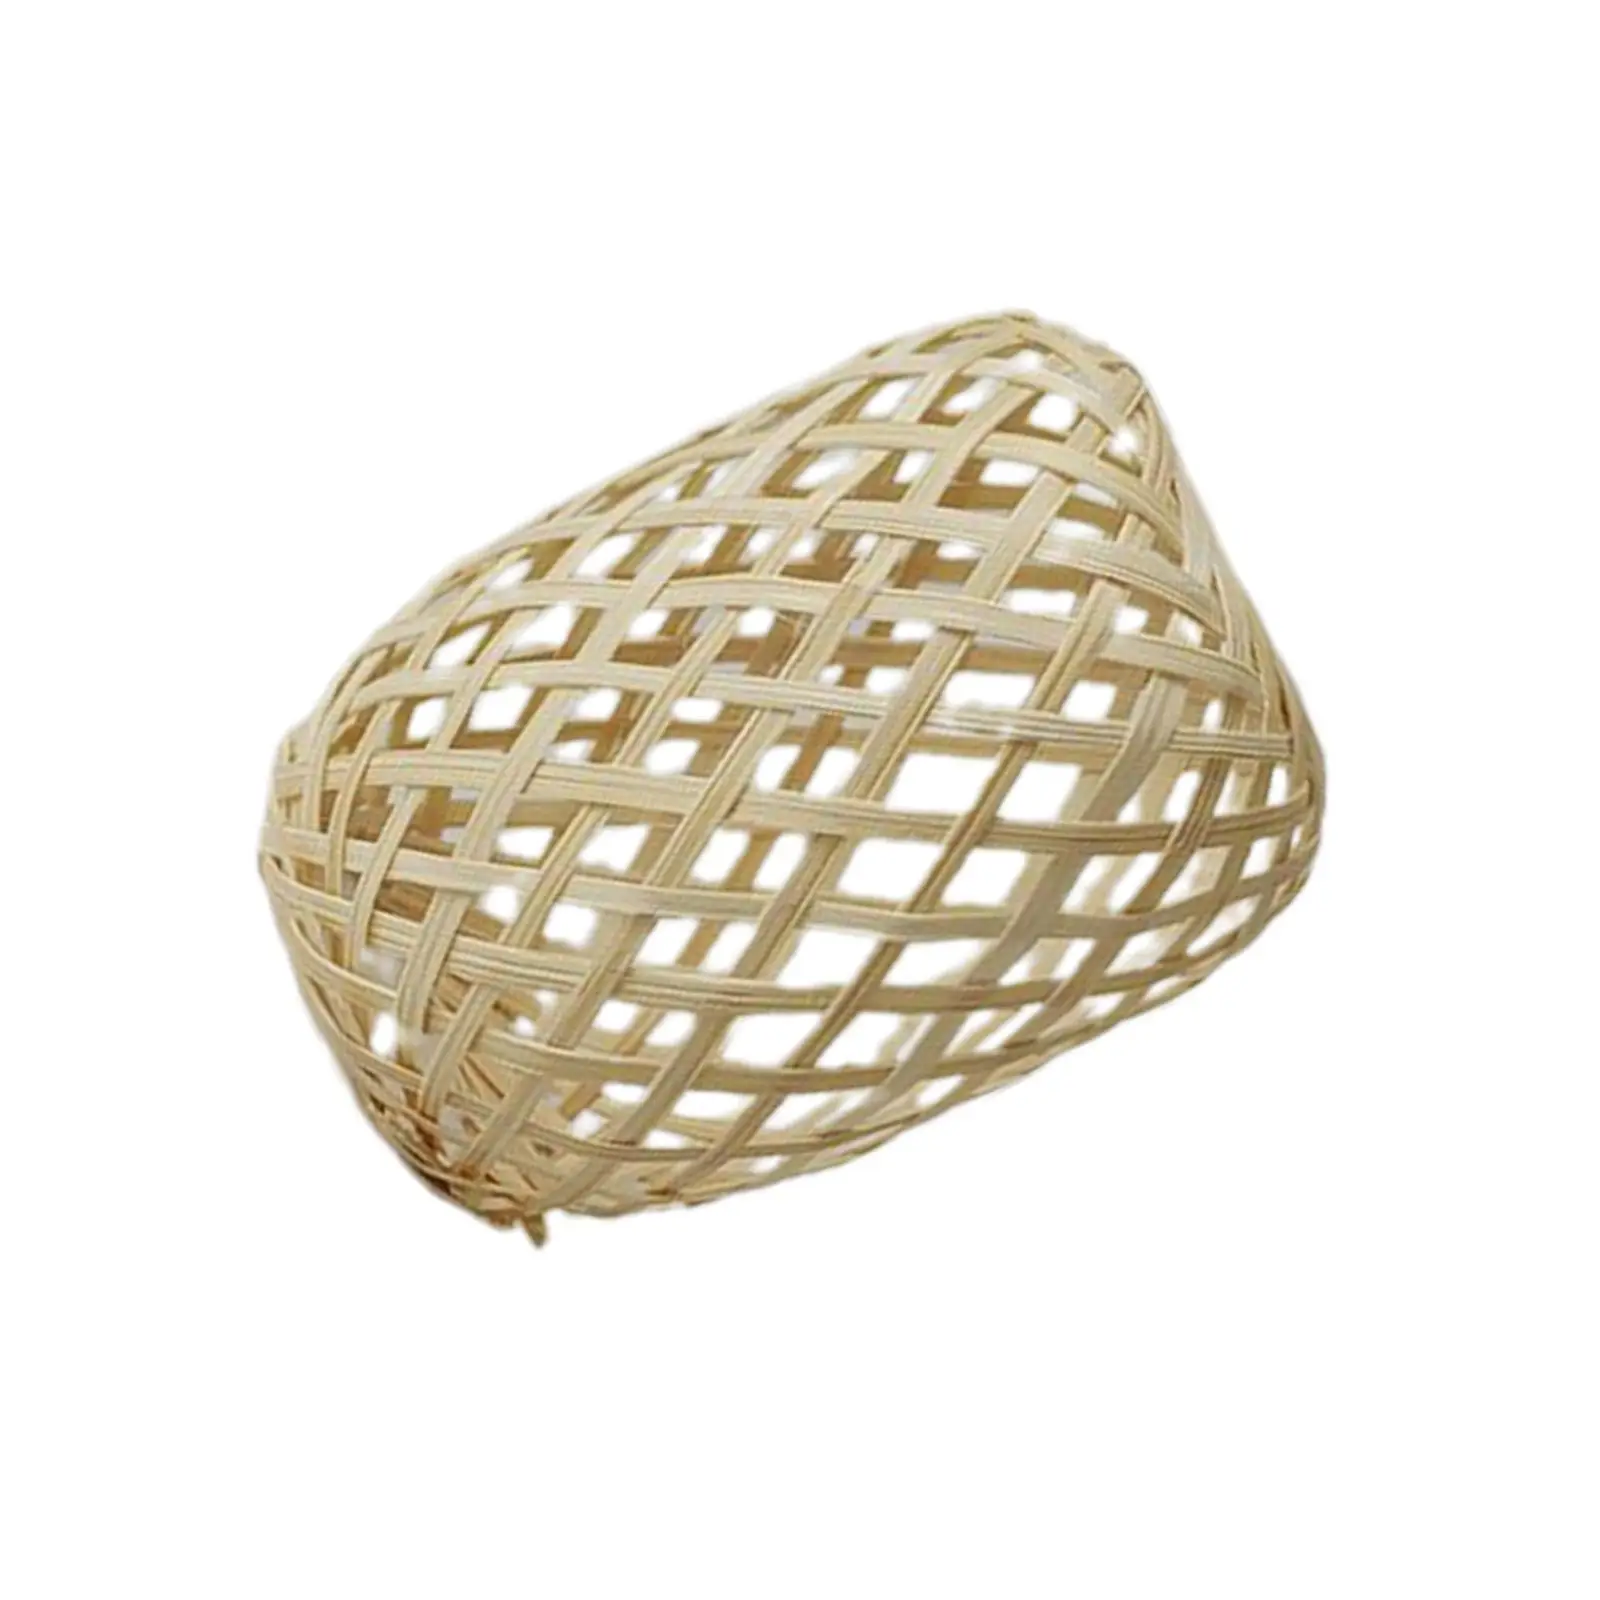 Rustic Lantern Pendant Light Cover Decor DIY Supply Handwoven Bamboo Lamp Shade